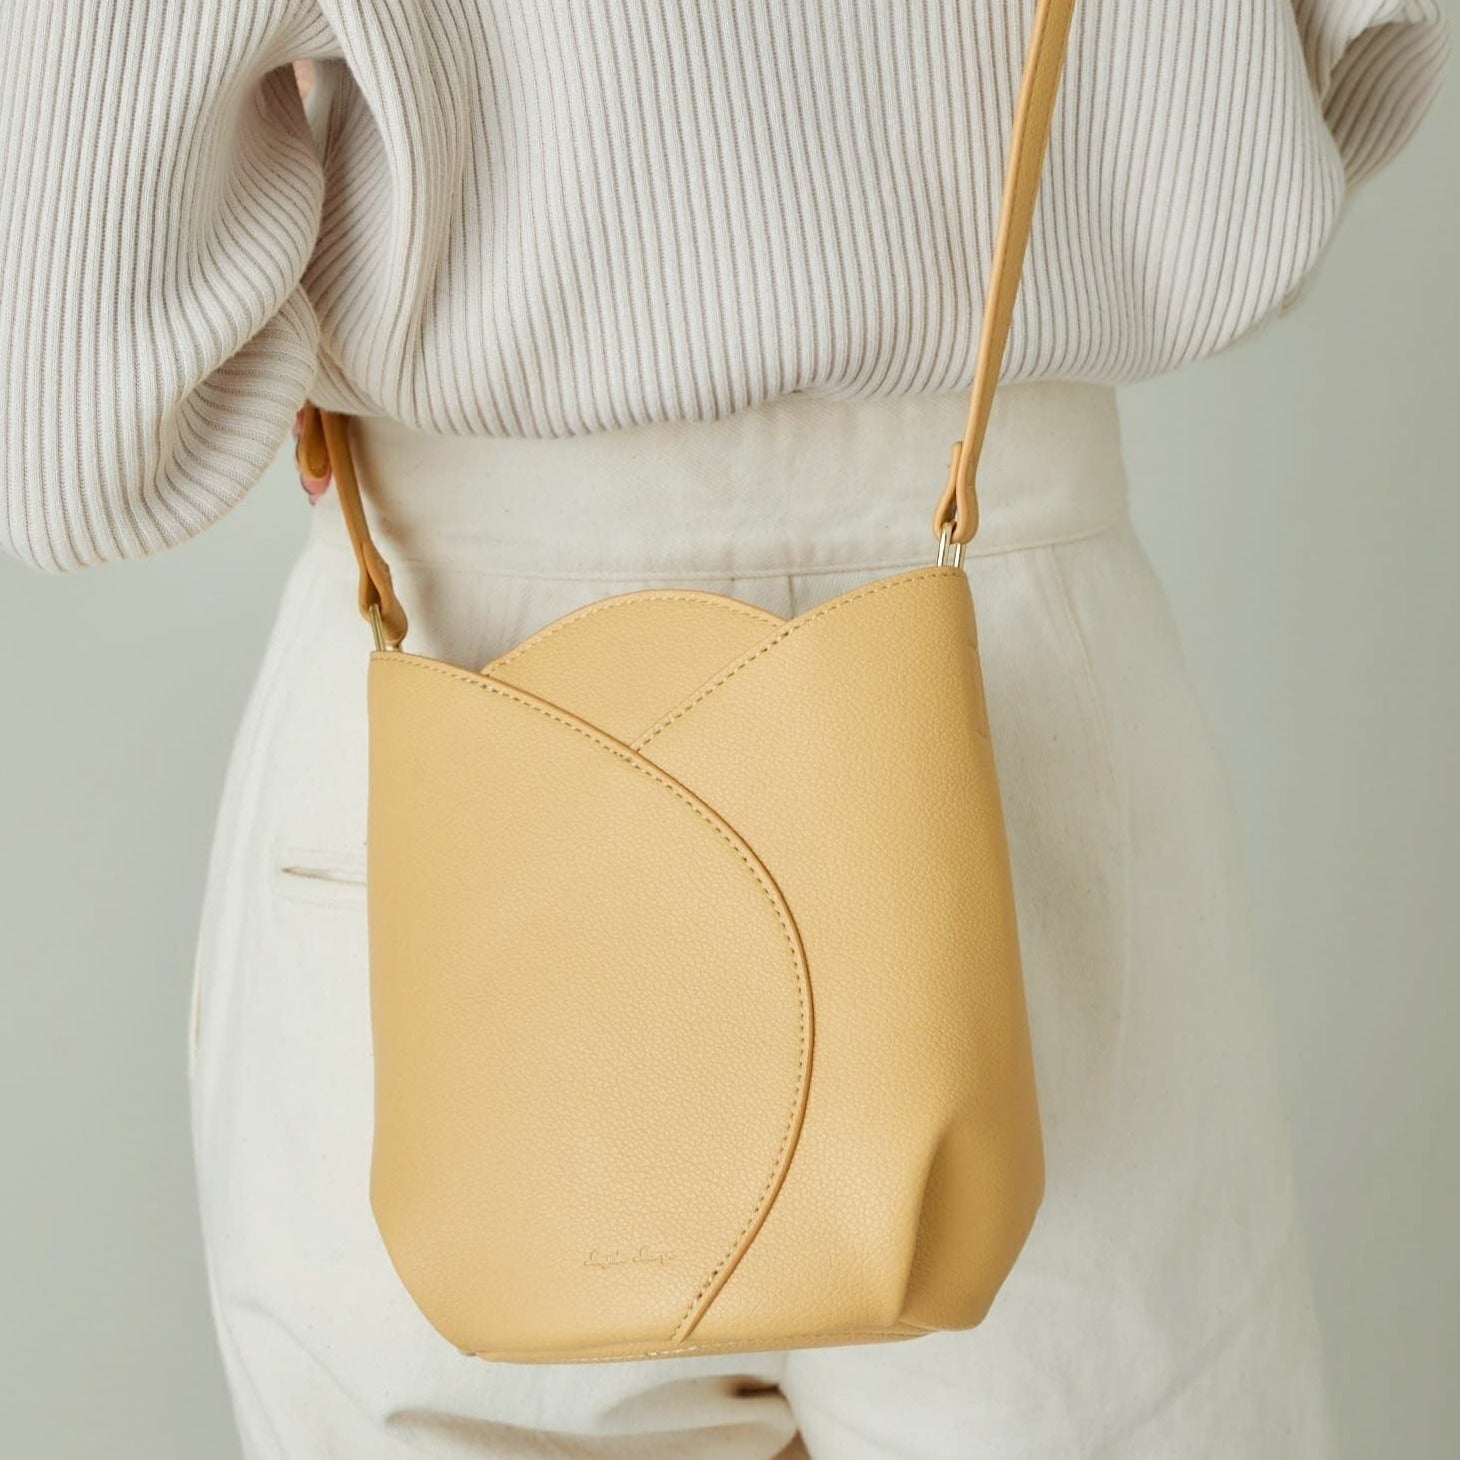 Anello Atelier Mini Shoulder Bag (Light Grey)